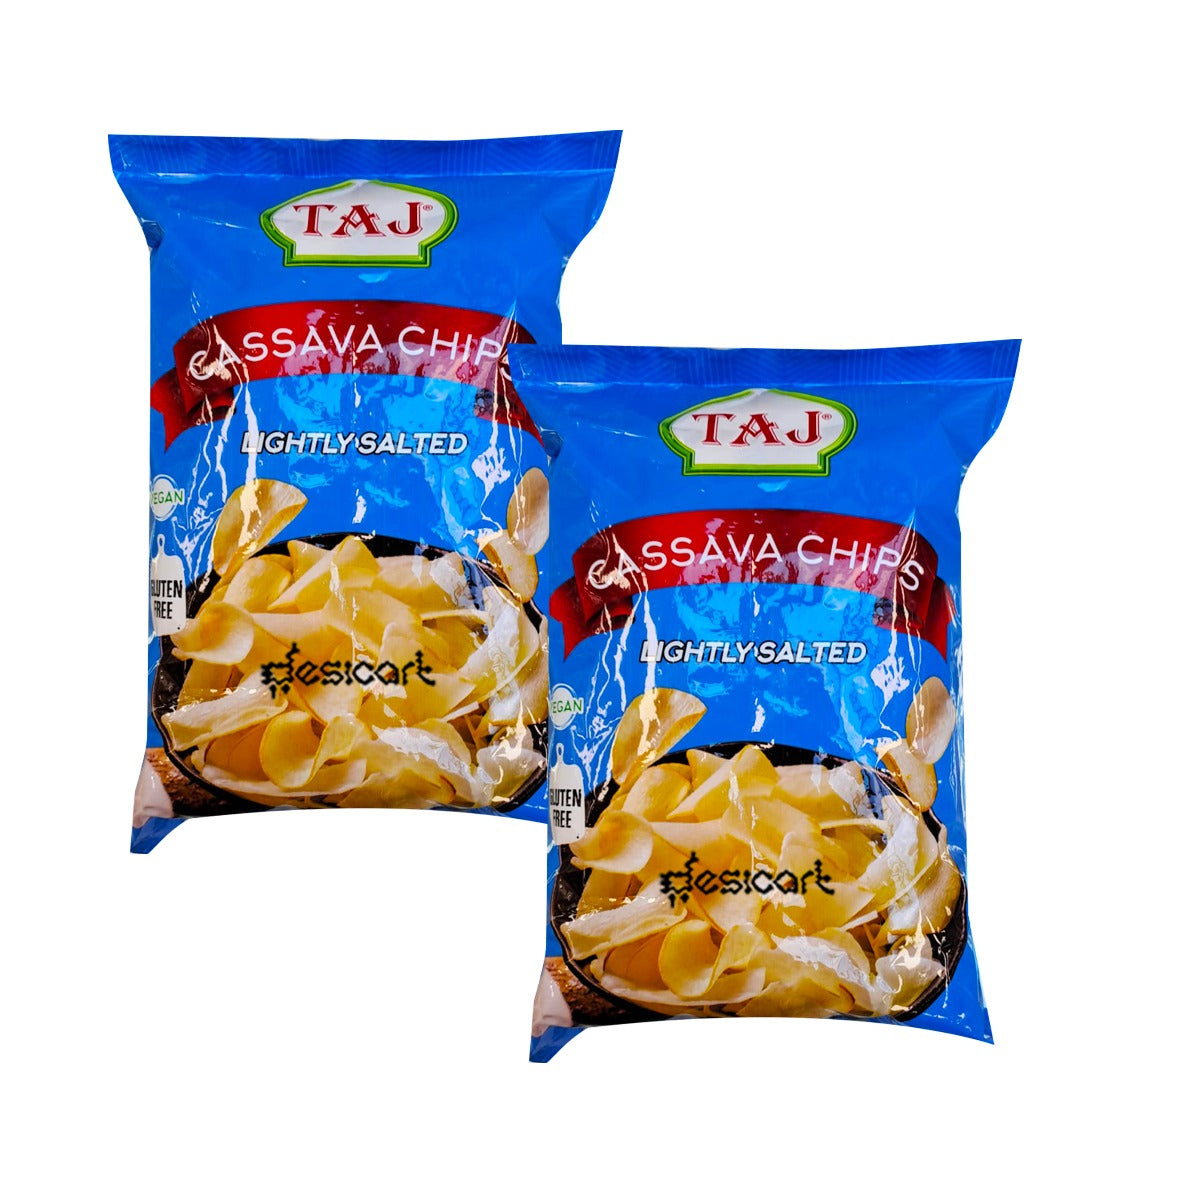 Taj Cassava Lightly Salted Pack of 2 200gm